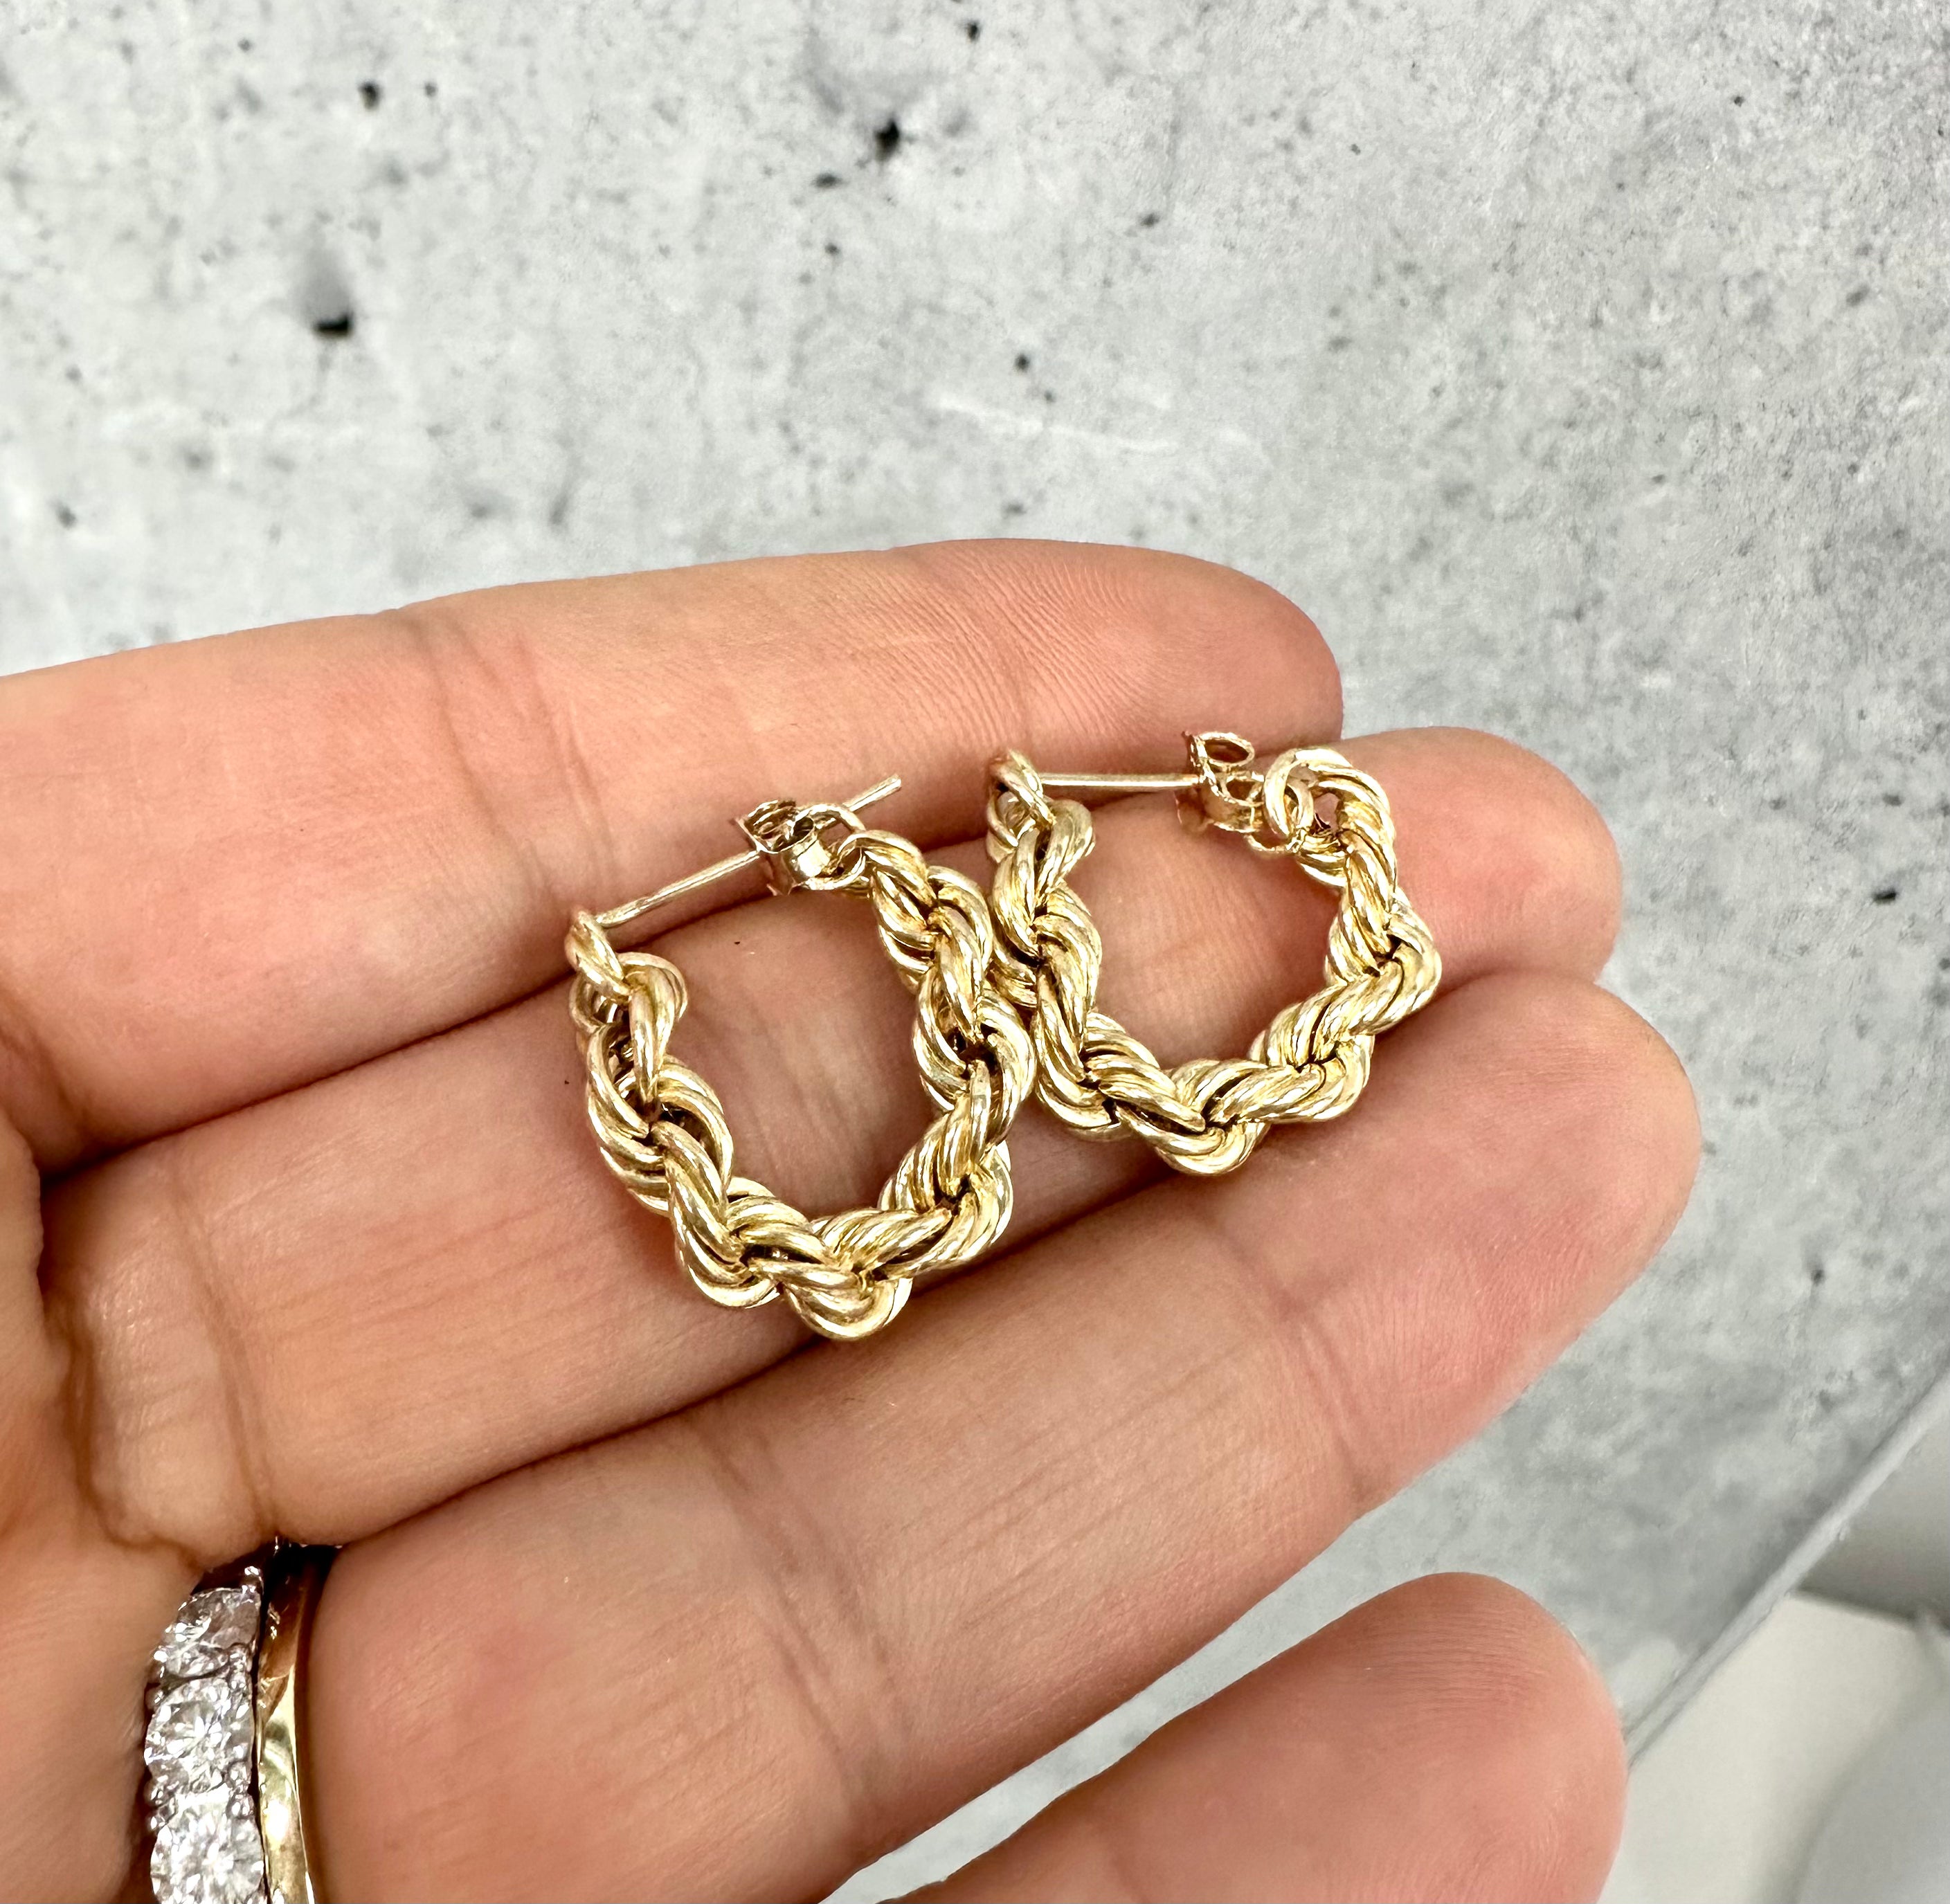 Rope Earrings 10K Gold